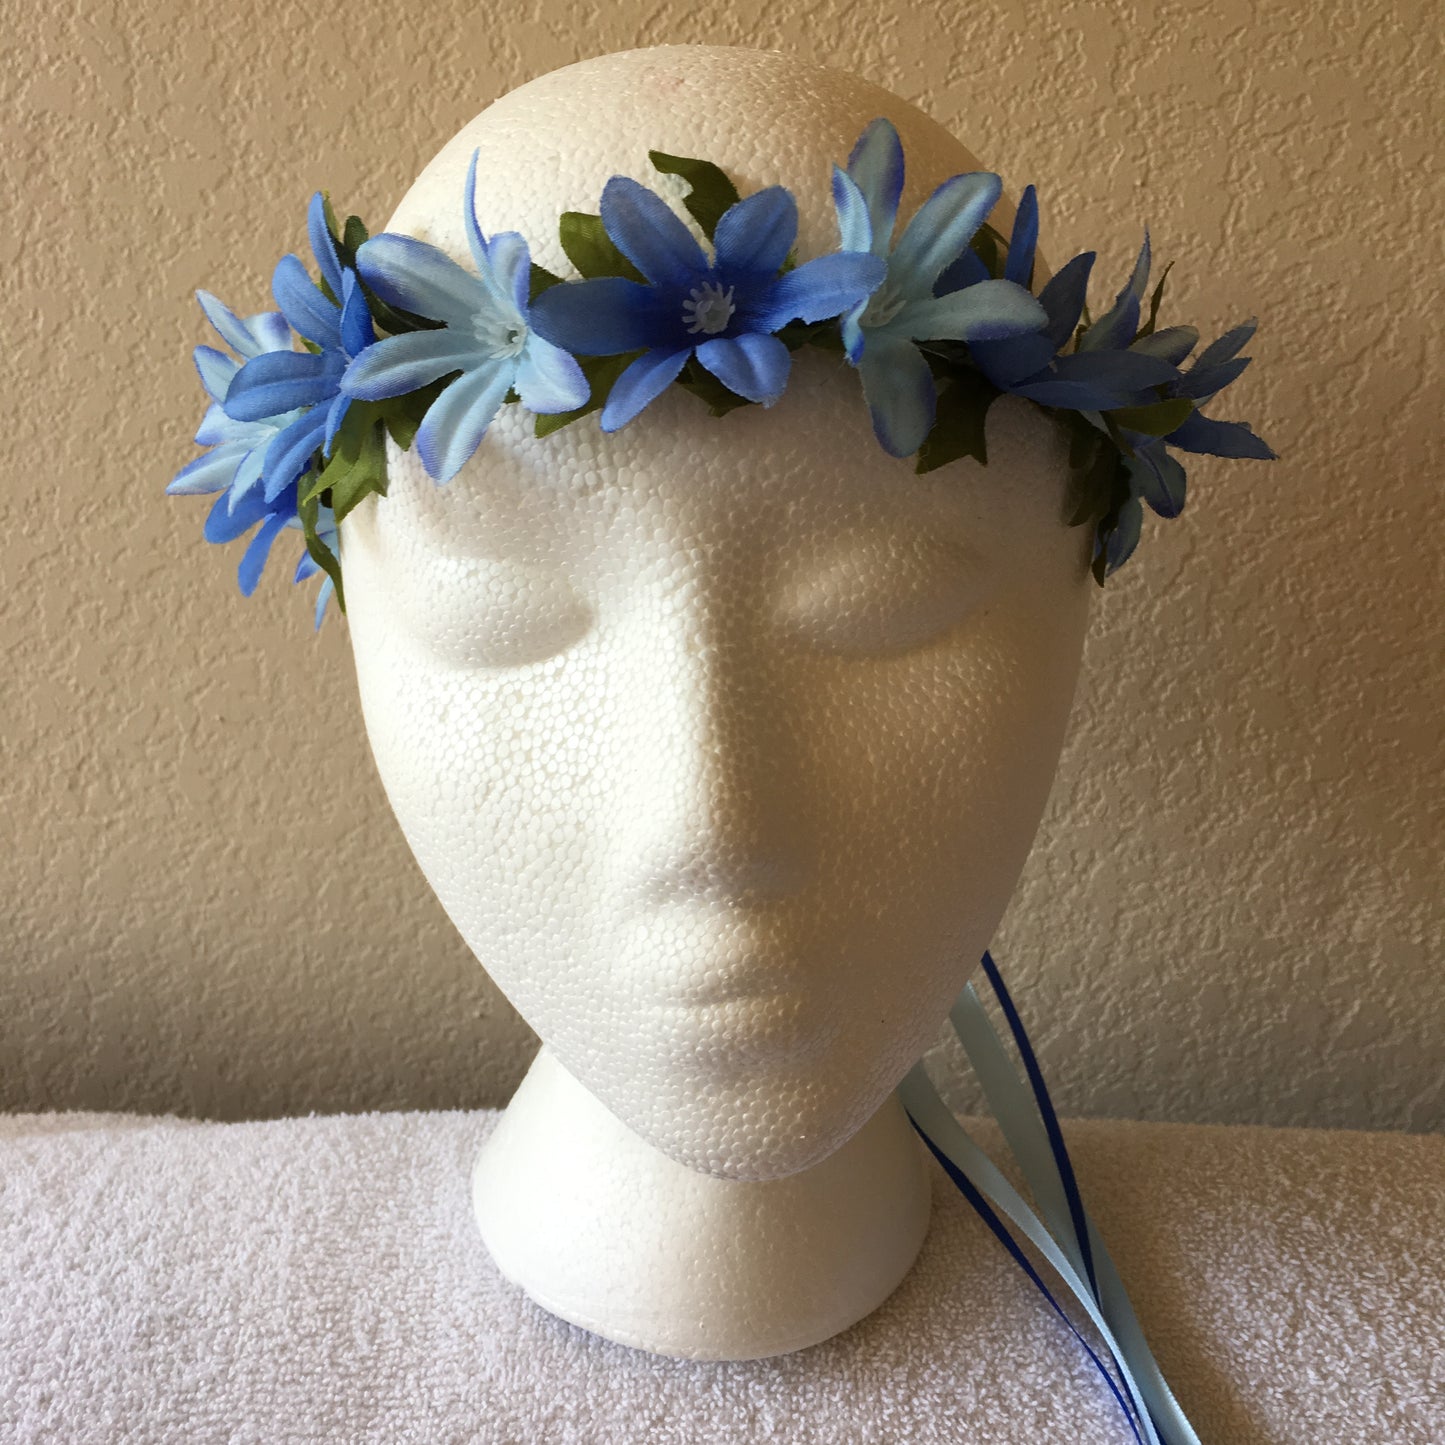 Extra Small Wreath - Dark & light blue spiky flowers